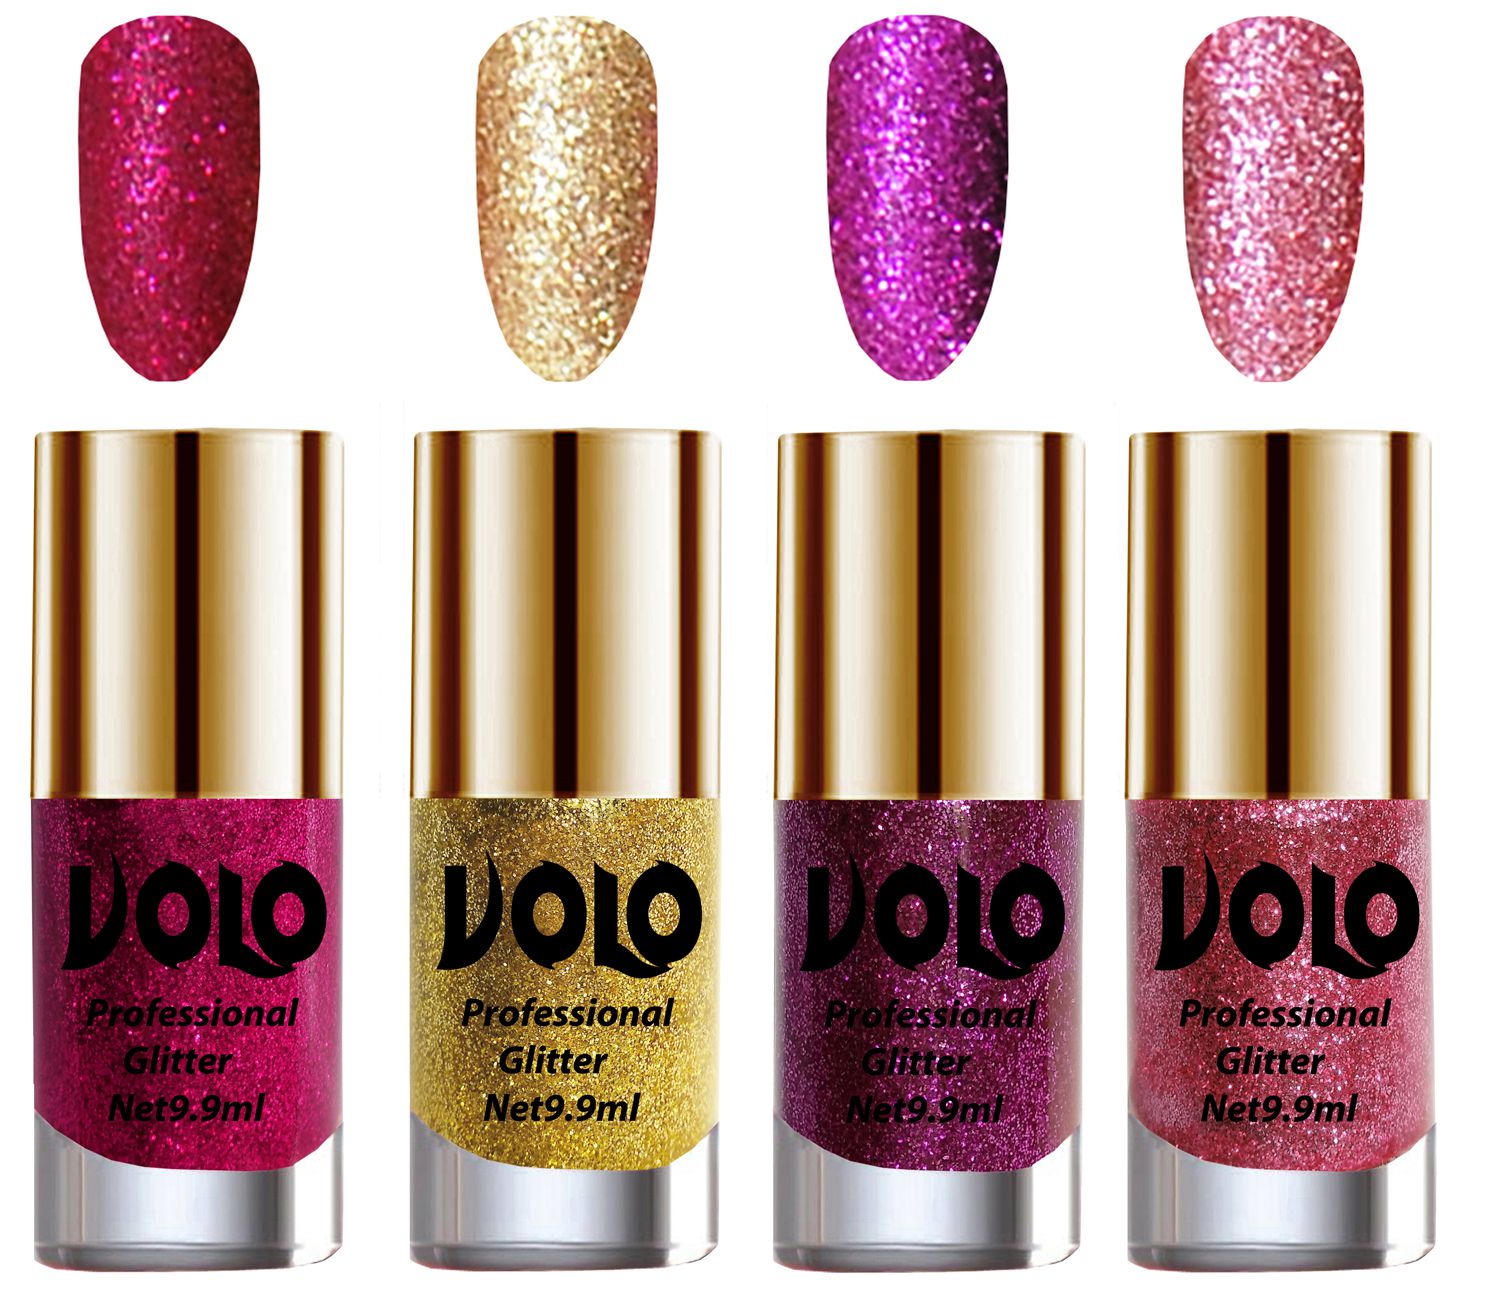     			VOLO Professionally Used Glitter Shine Nail Polish Magenta,Gold,Purple Pink Pack of 4 39 mL